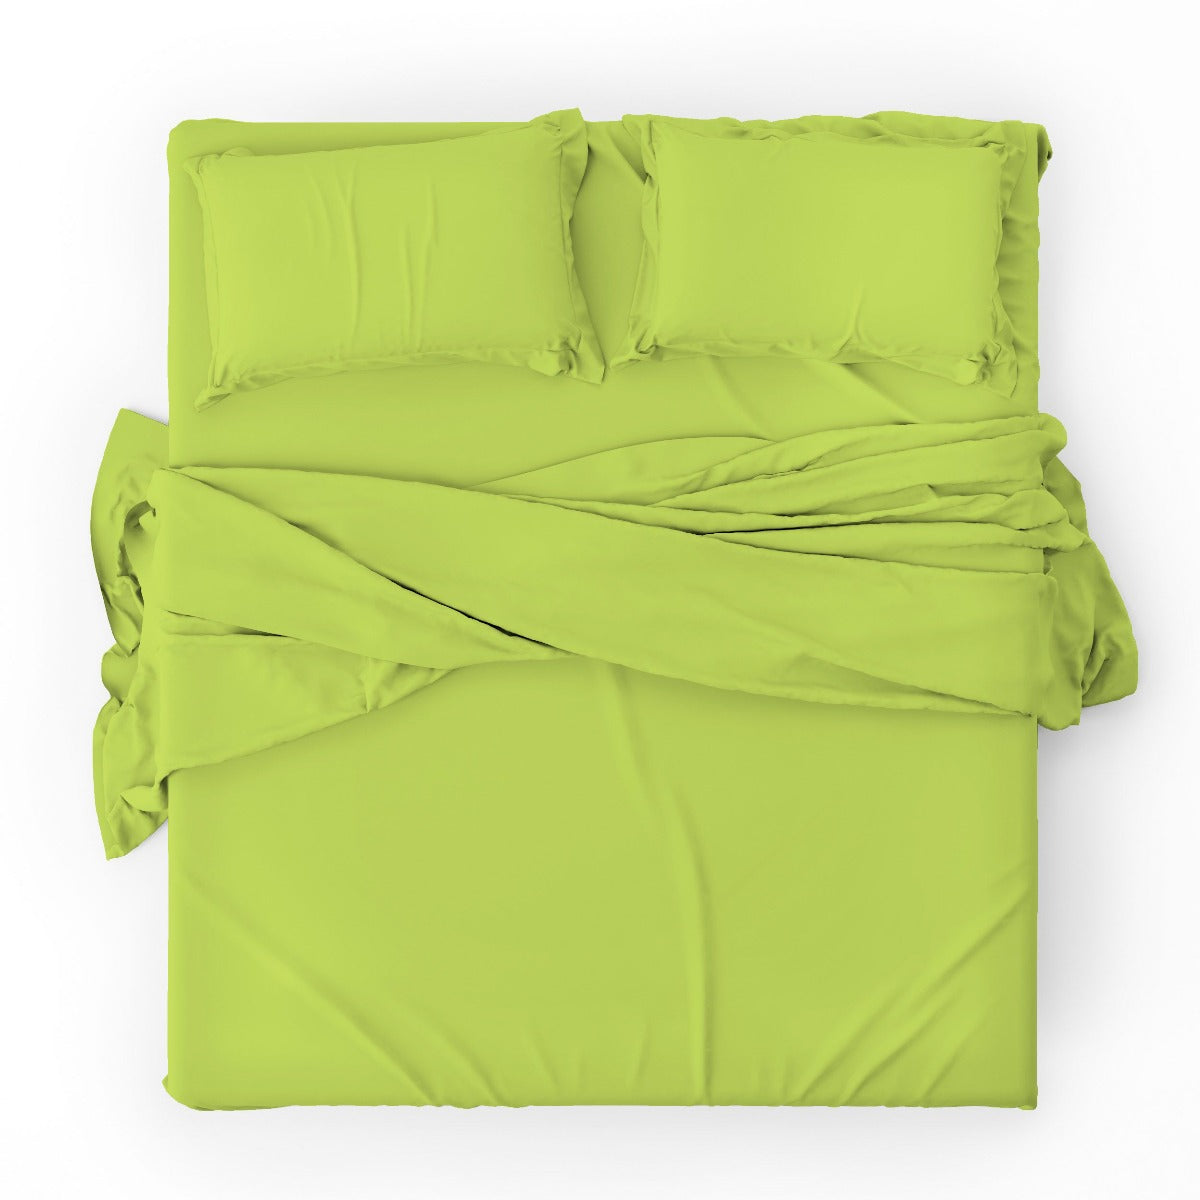 Duvet cover with pillowcases - Plain Apple Green